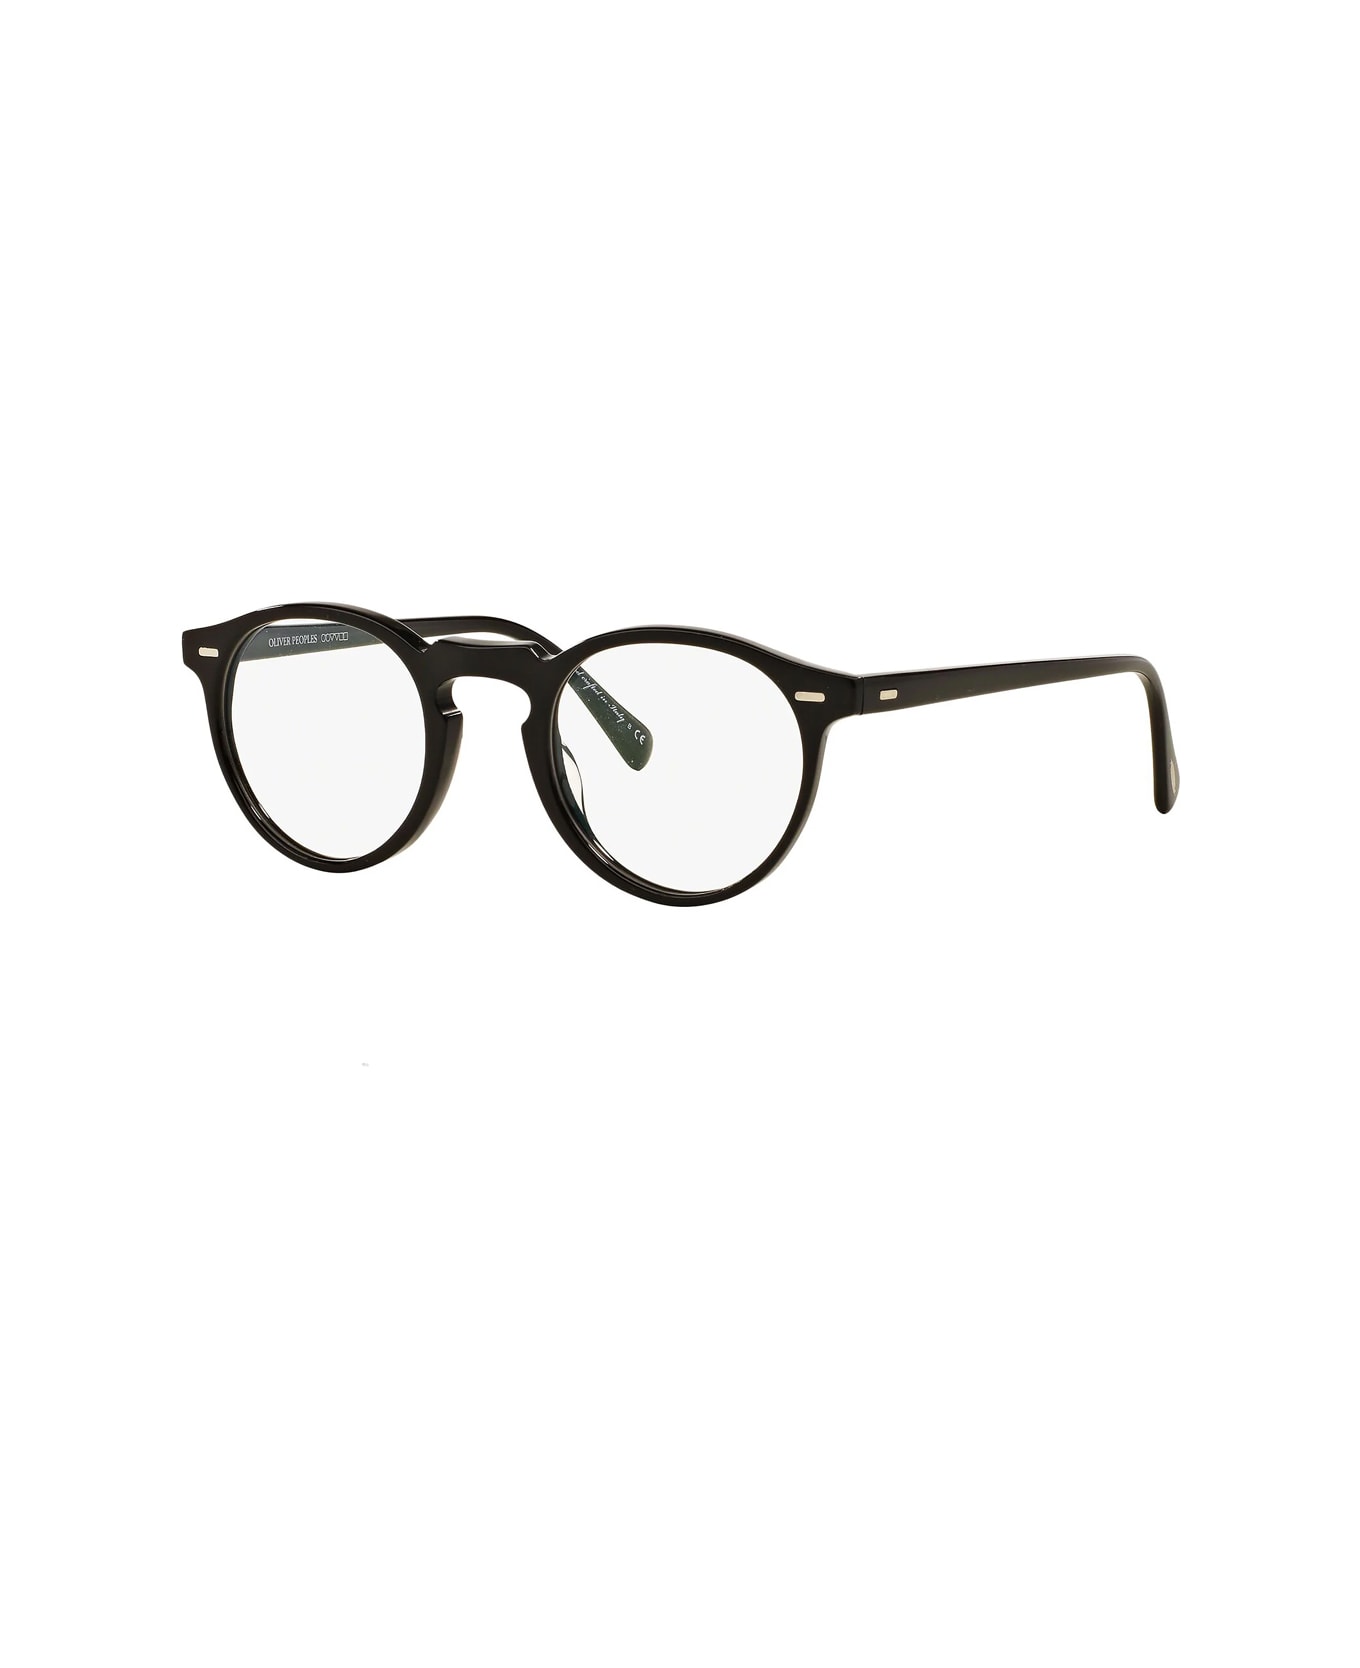 Oliver Peoples Ov5186 - Gregory Peck 1005 Glasses - Nero アイウェア